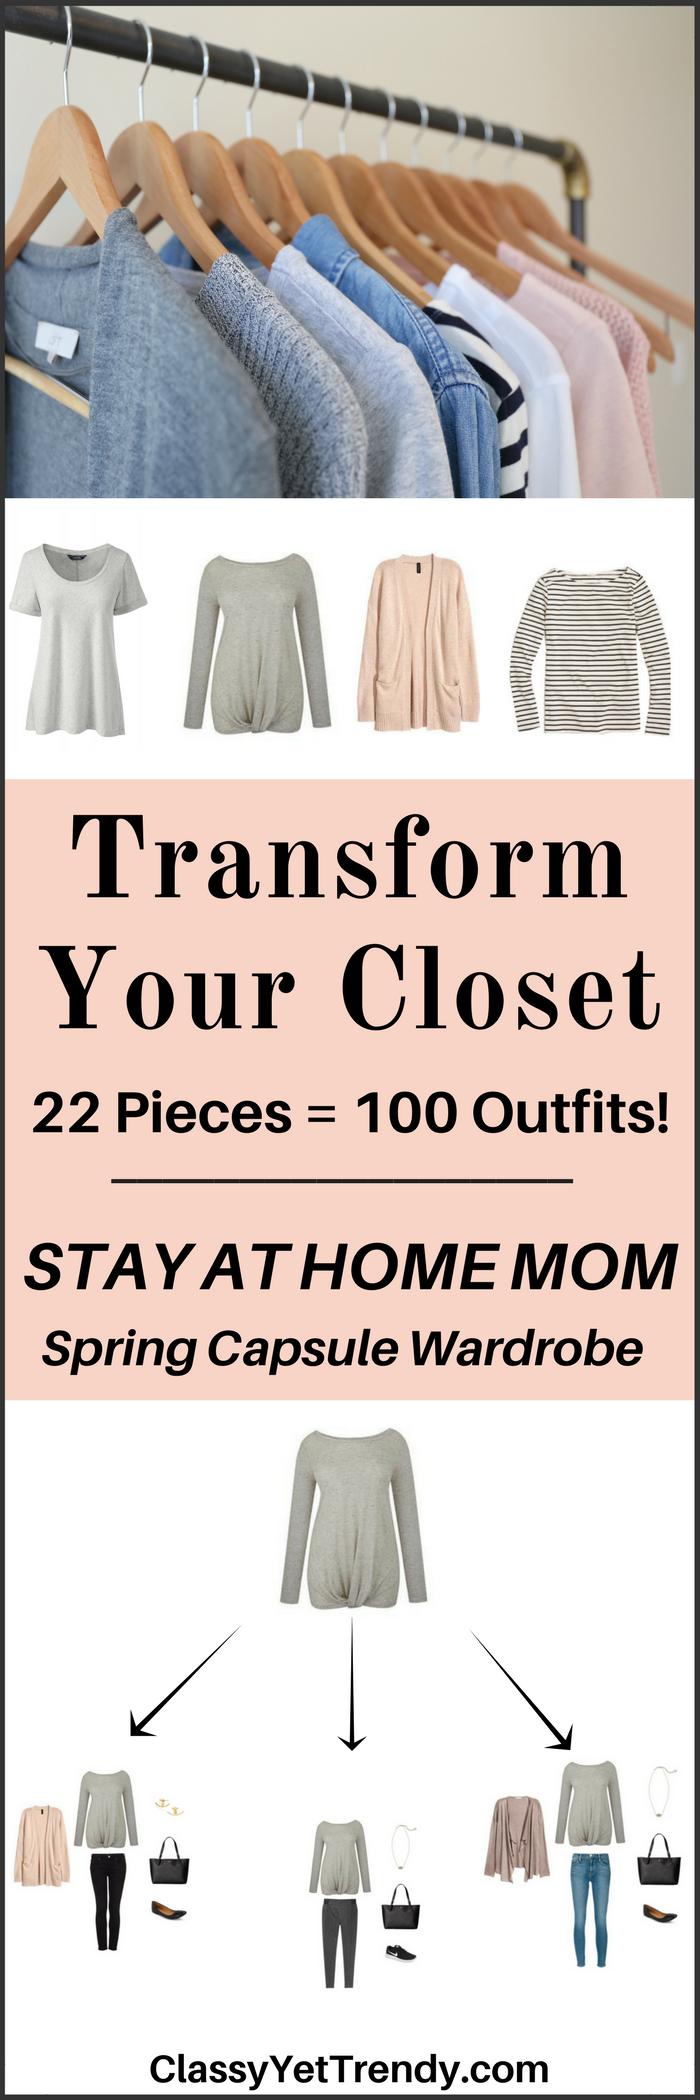 Stay At Home Mom Capsule Wardrobe e-book- Spring 2017